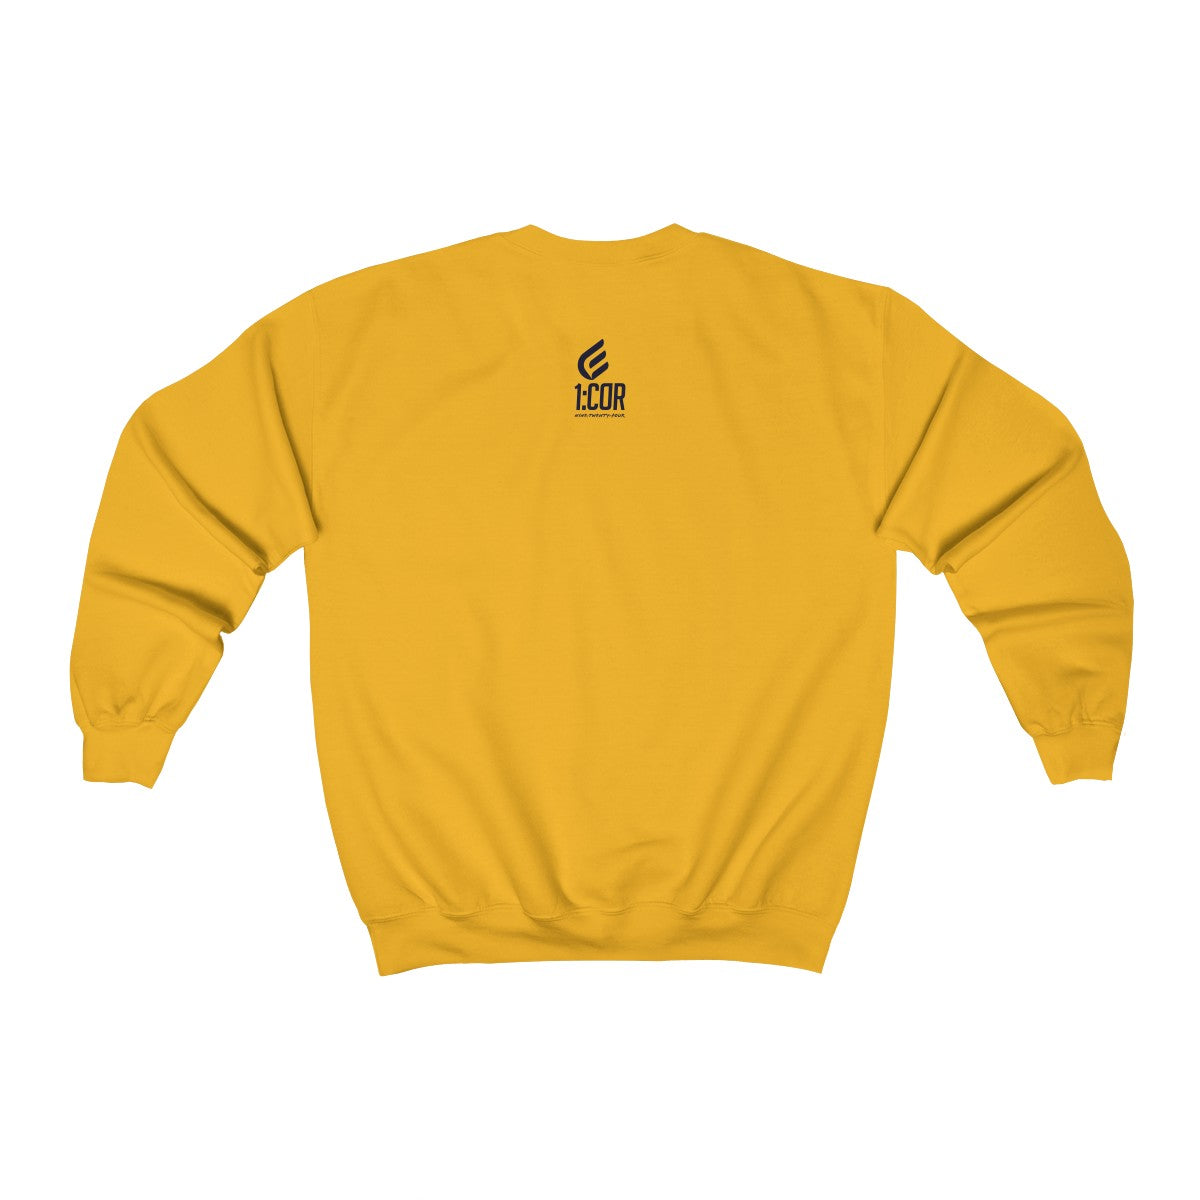 Be Bold | Crewneck Sweatshirt